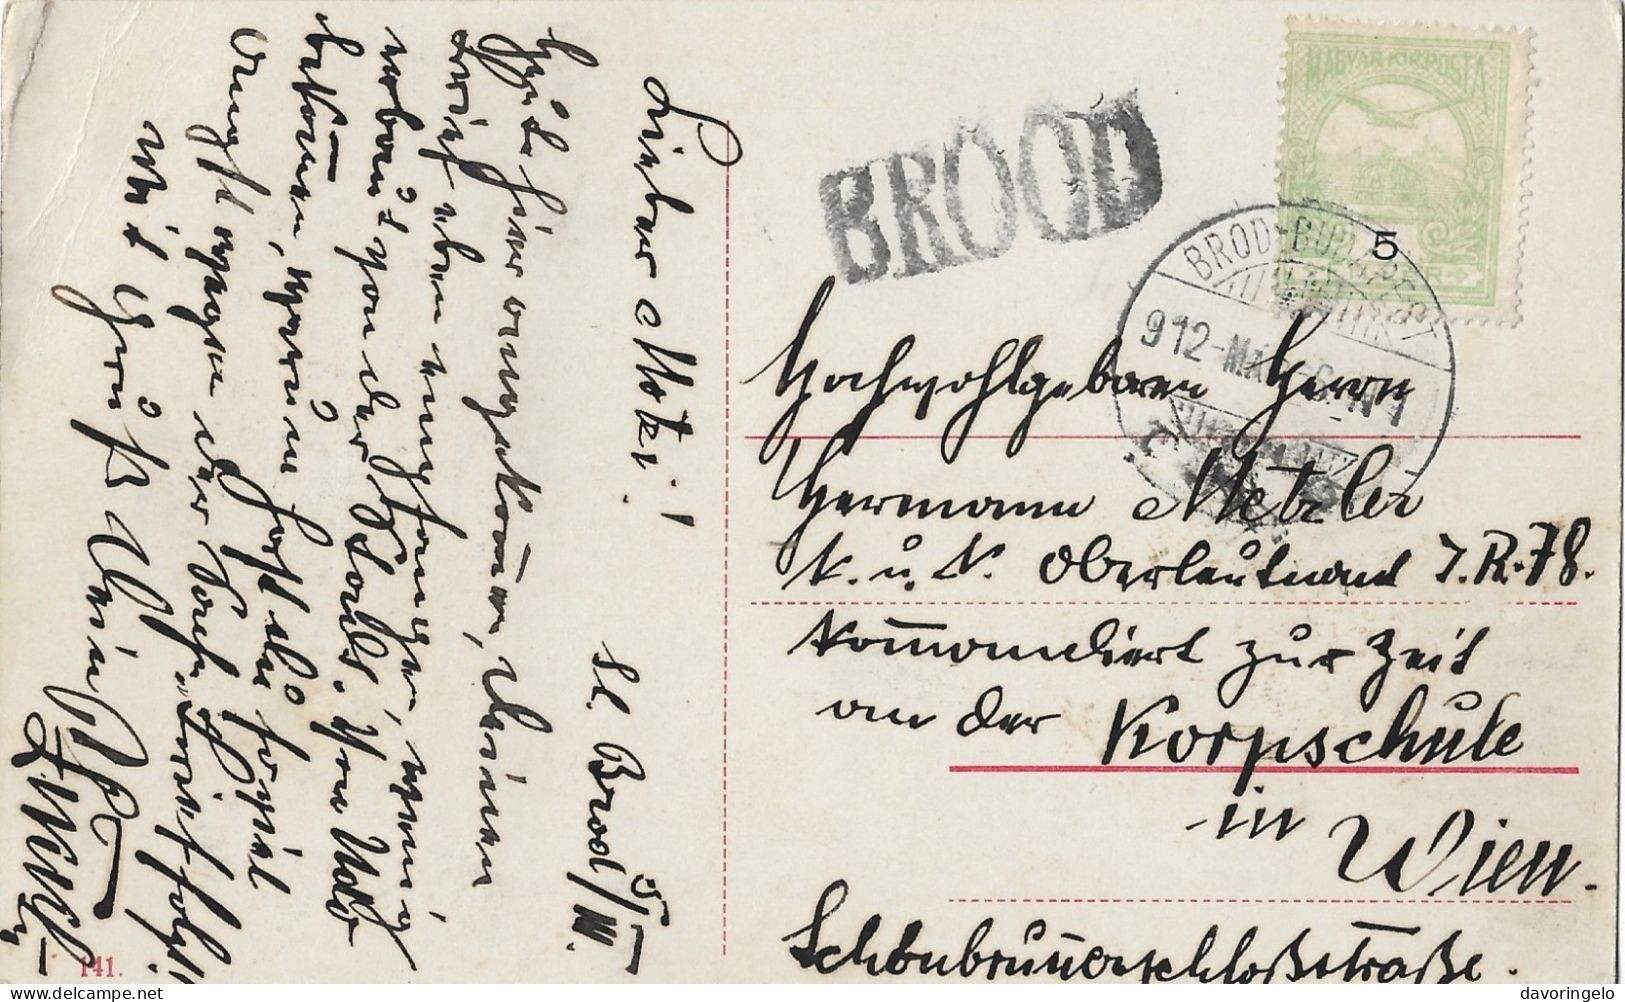 Bosnia-Herzegovina/Austria-Hungary/Croatia, Picture Postcard-year 1912, Rare Cancel "BROOD" - Bosnia And Herzegovina